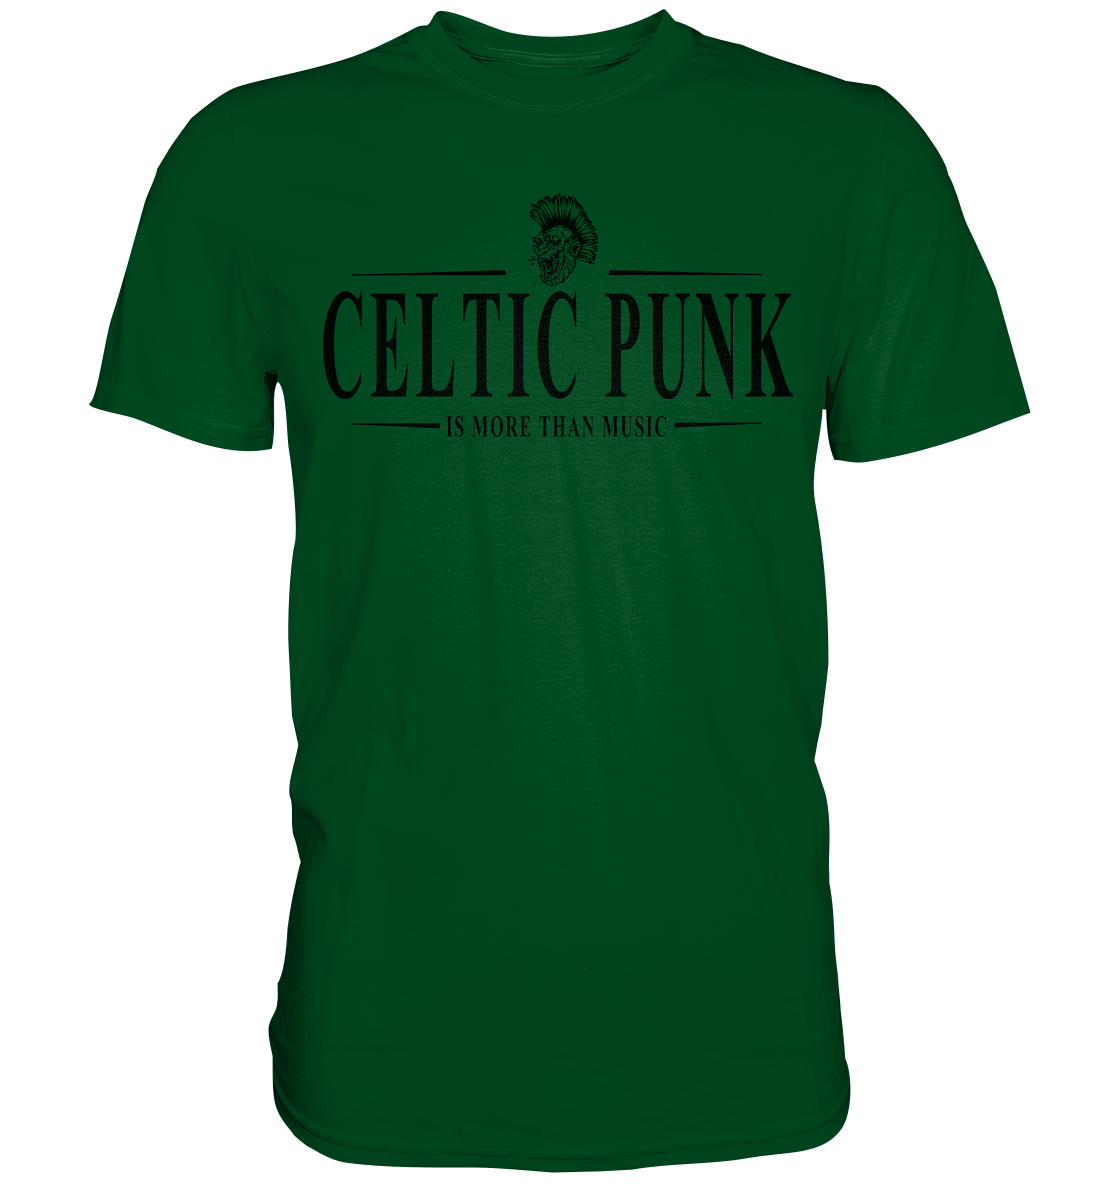 Celtic Punk "Is More Than Music" - Premium Shirt